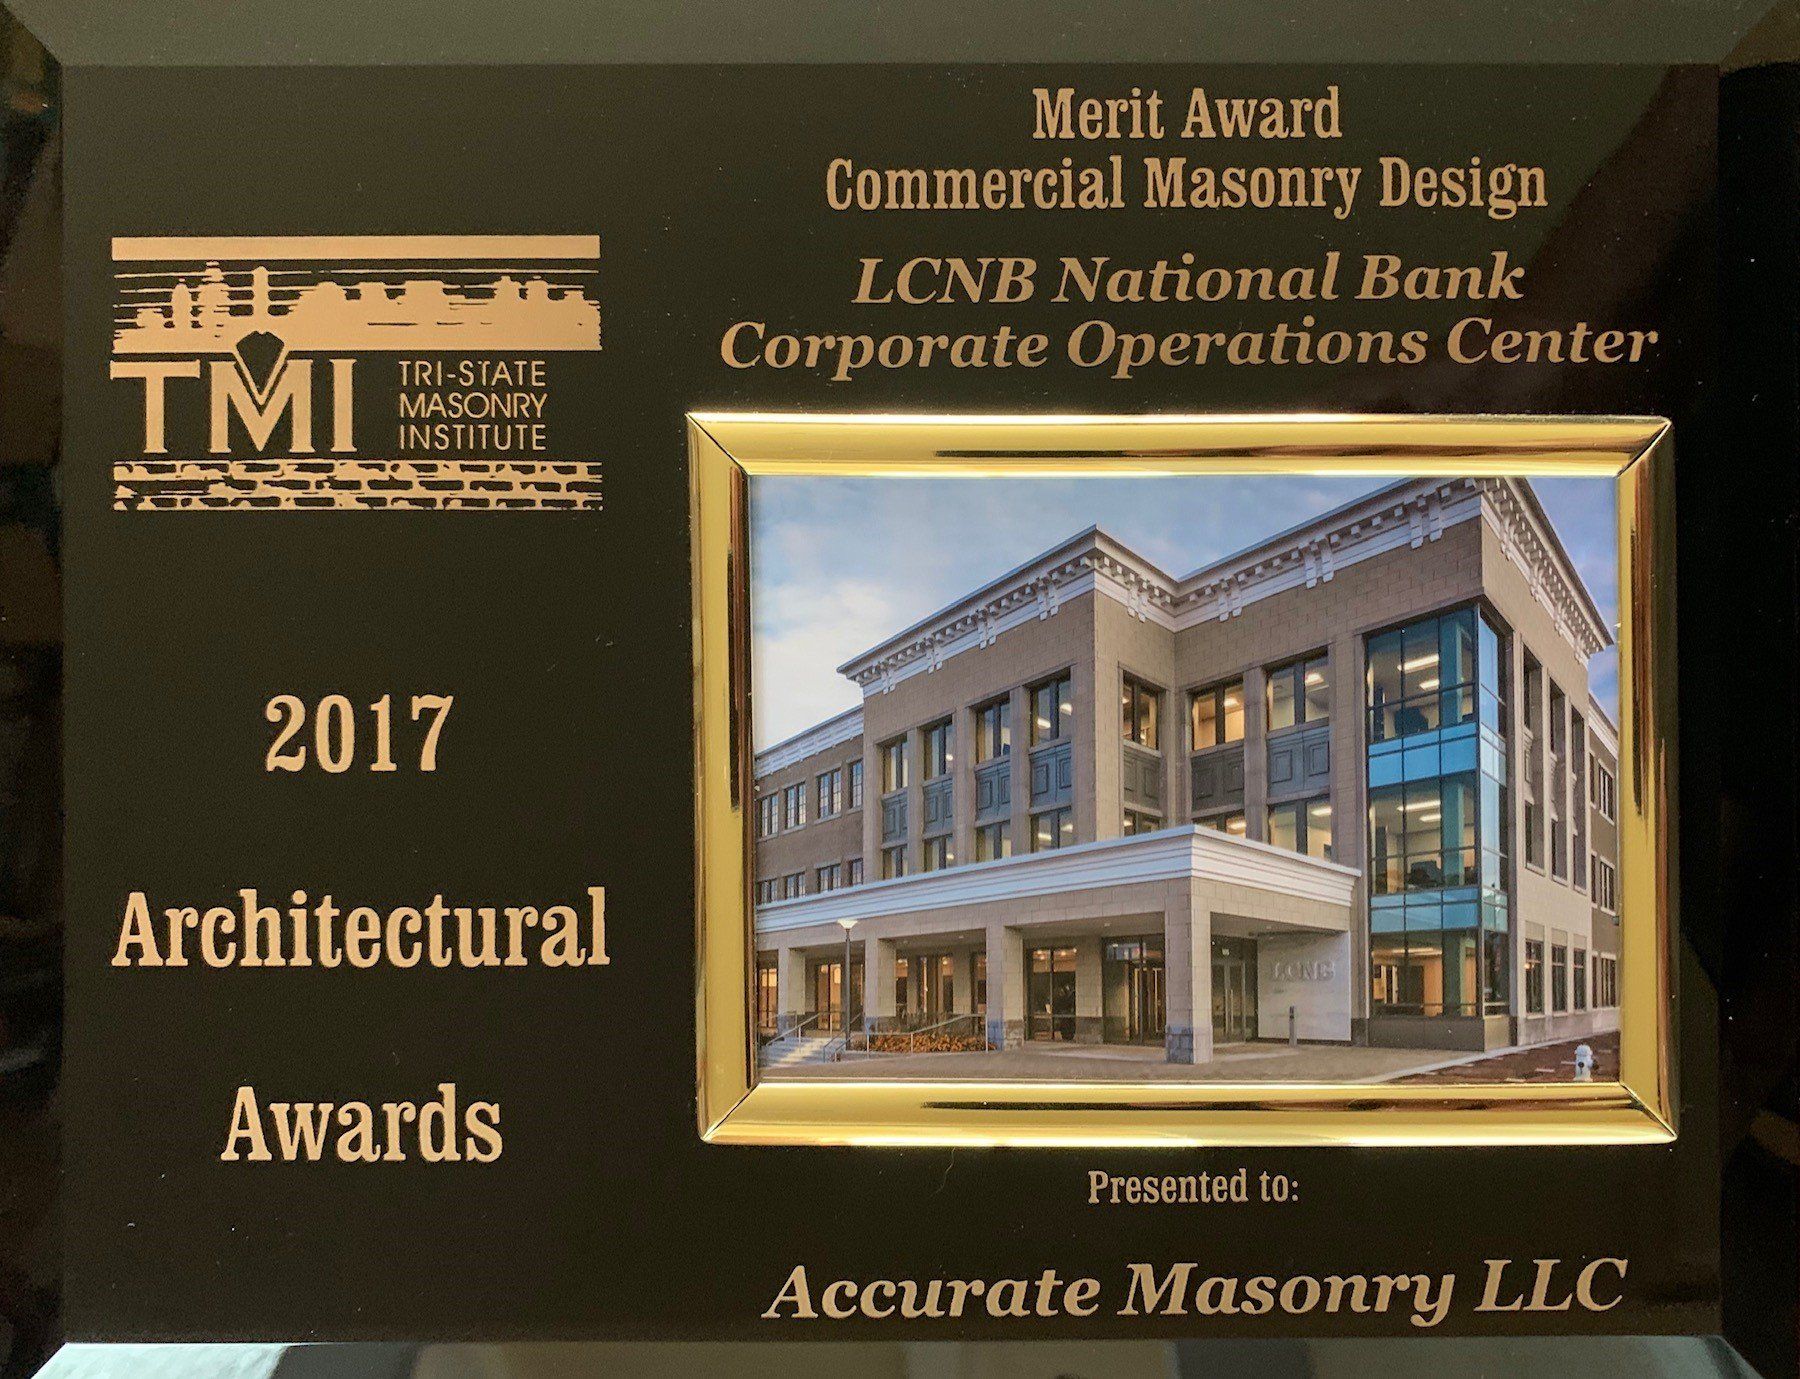 GE Family wellness center masonry design award